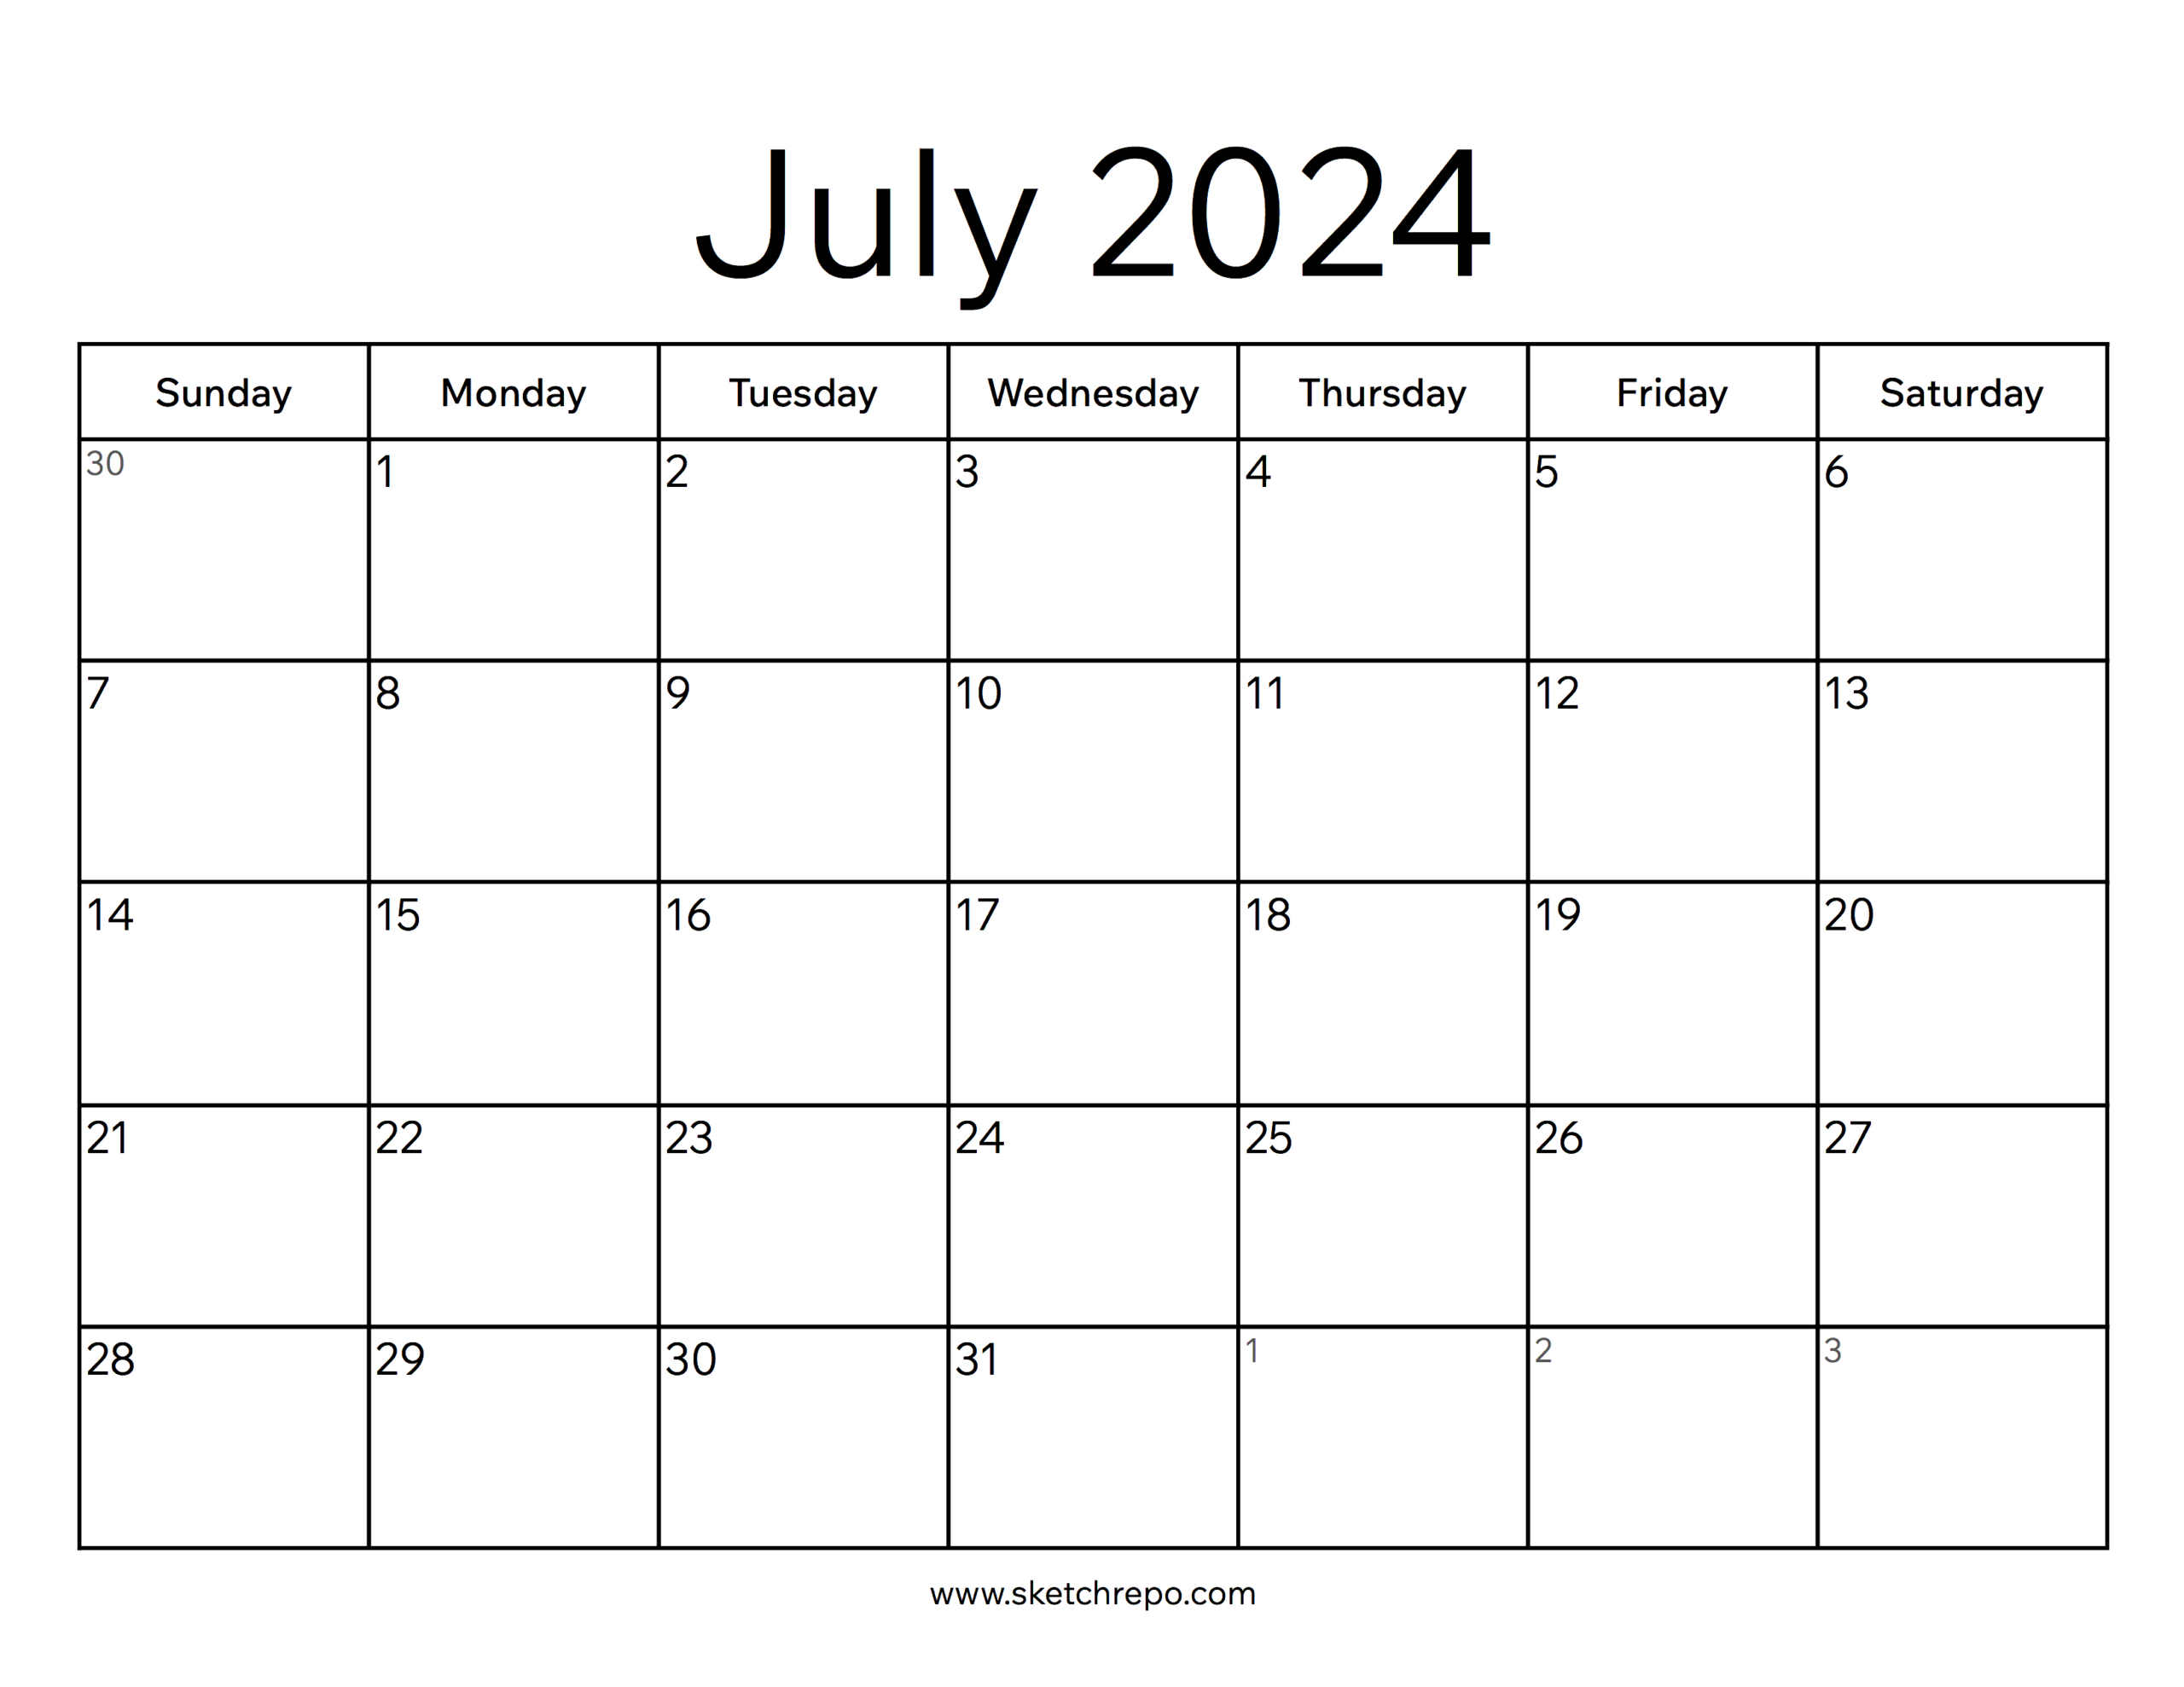 July 2024 Calendar – Sketch Repo regarding Calendar Dates July 2024